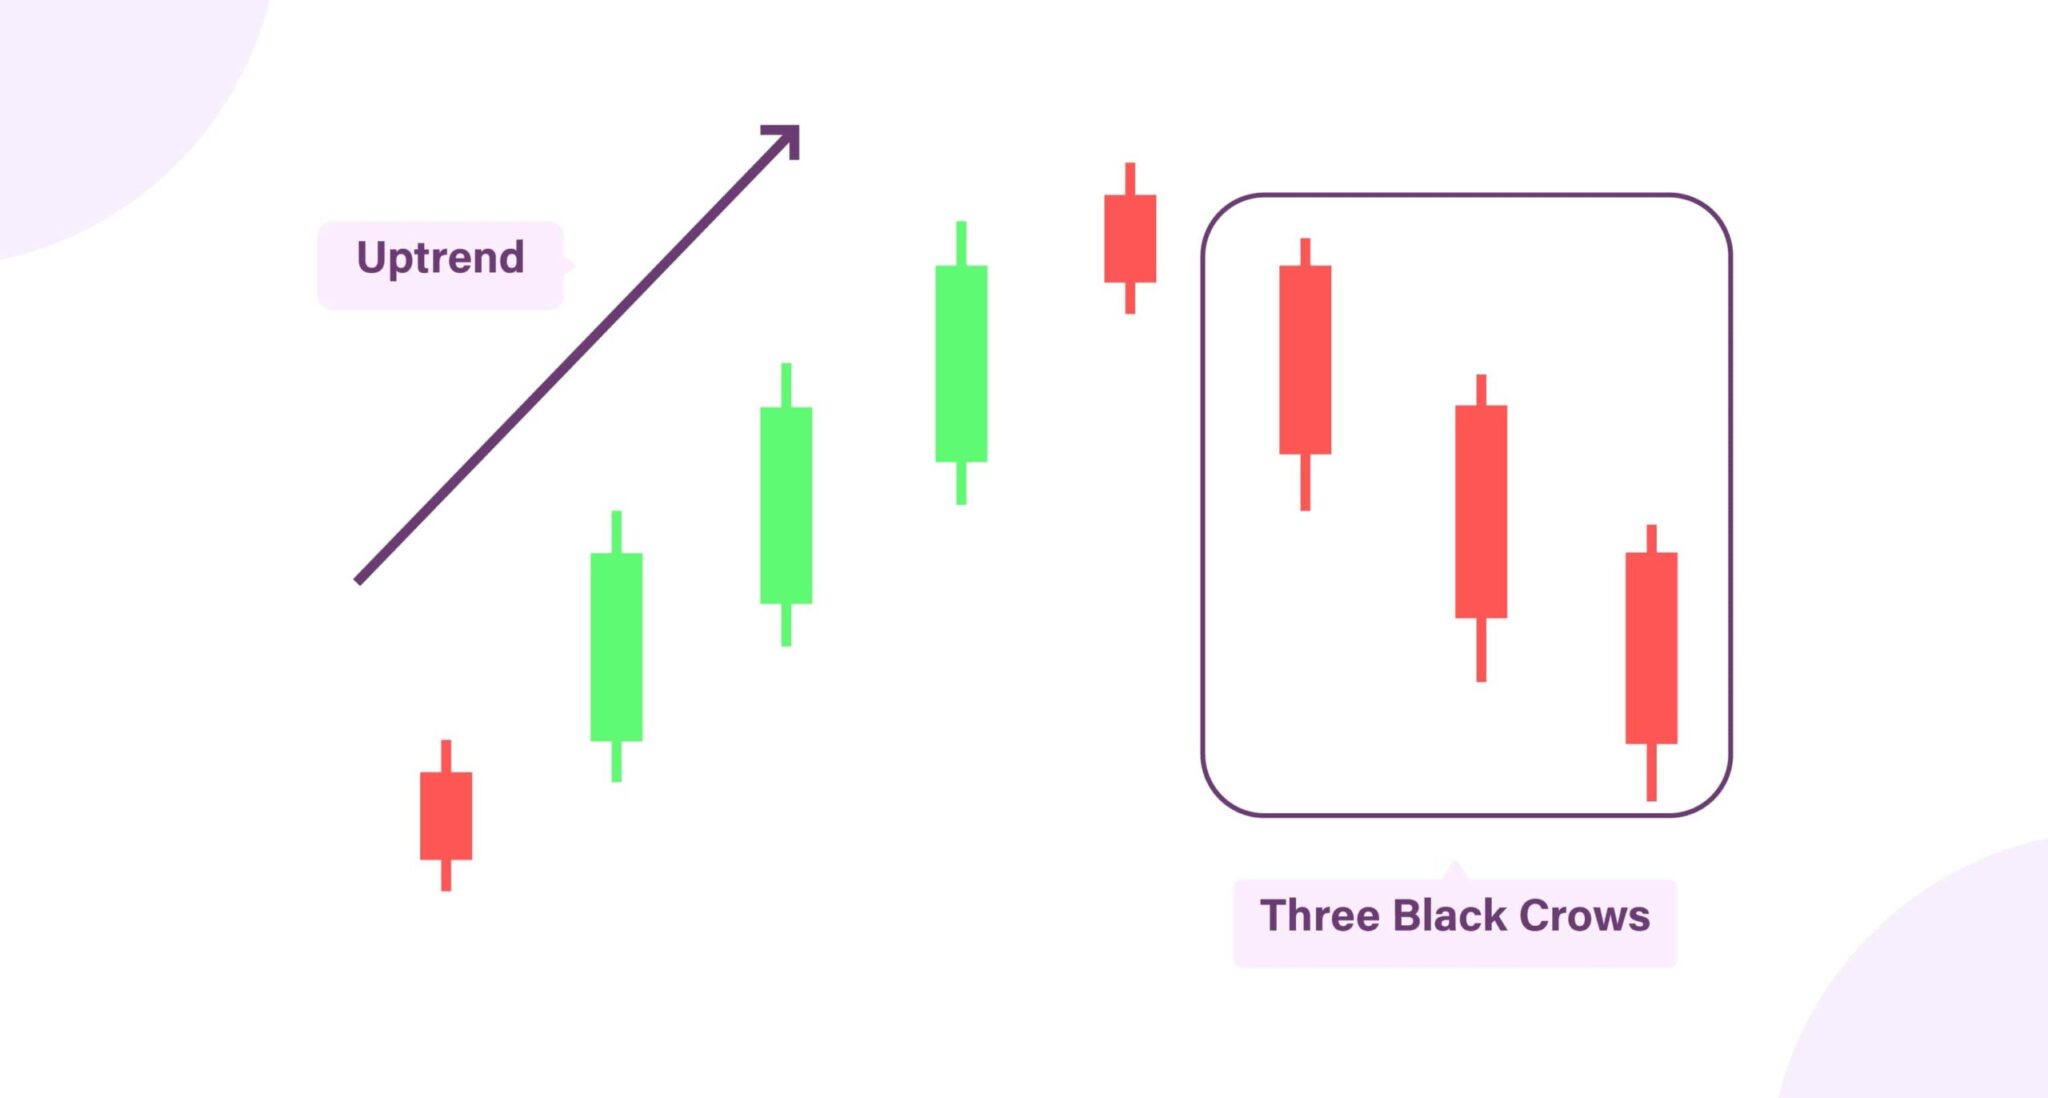 Pola Three Black Crows masuk dalam kategori pola reversal atau candlestick koreksi